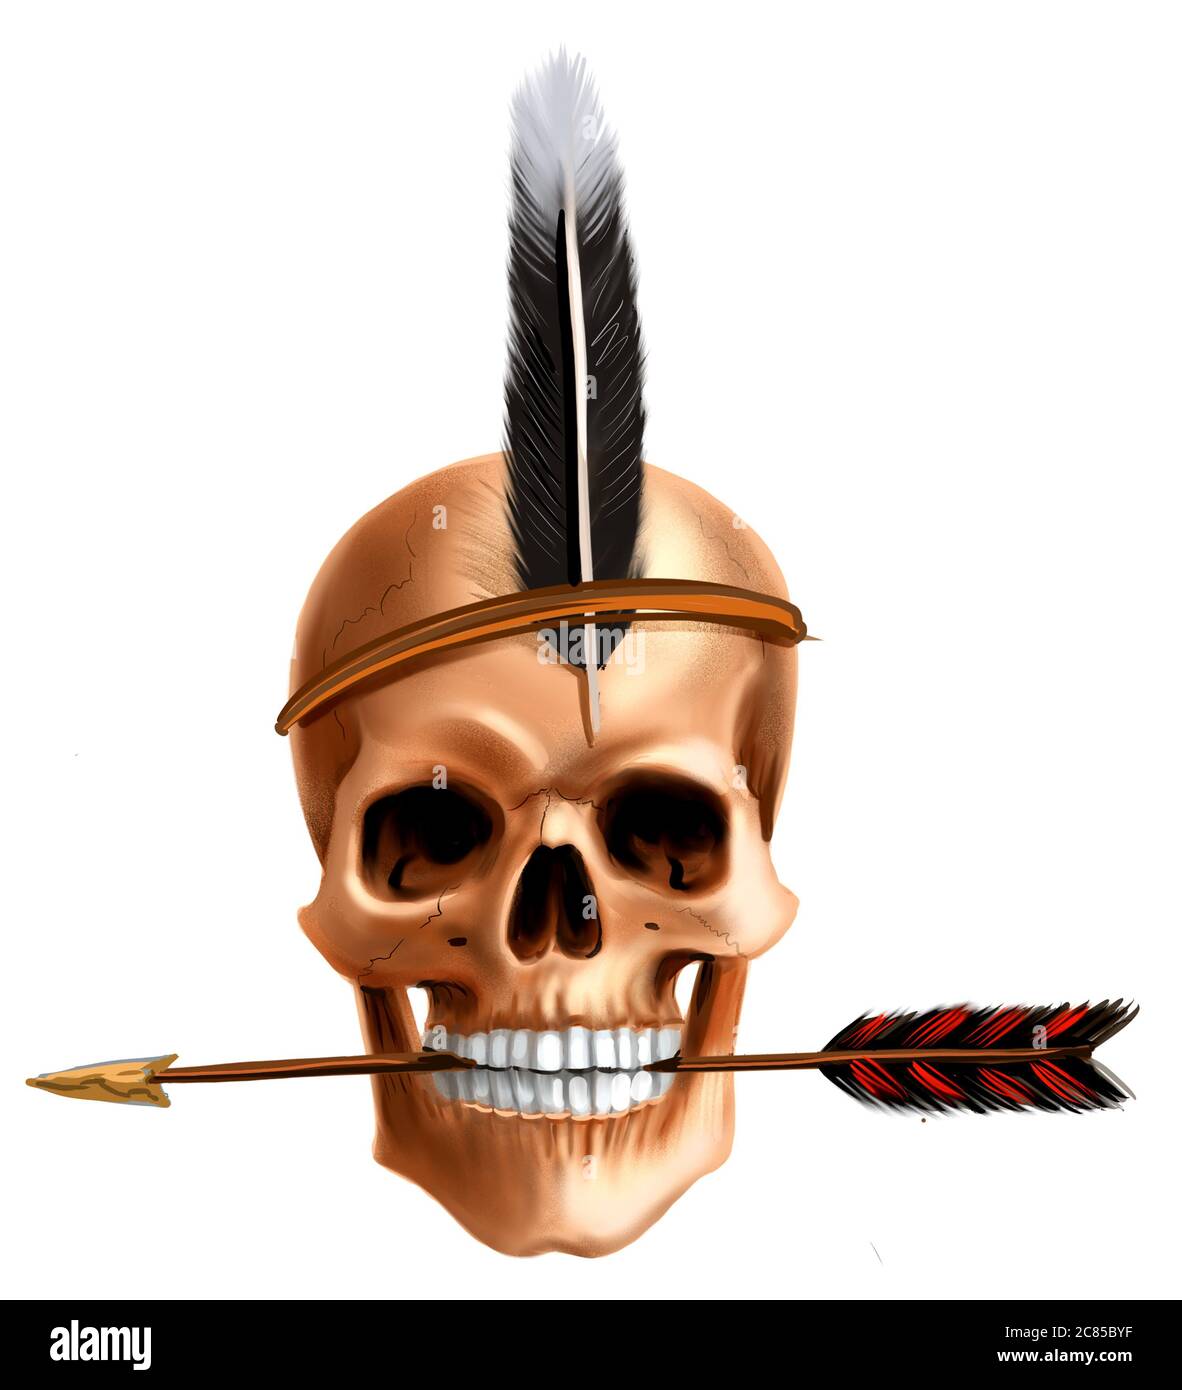 Human skull with an arrow in its teeth. Digital illustration Stock Photo